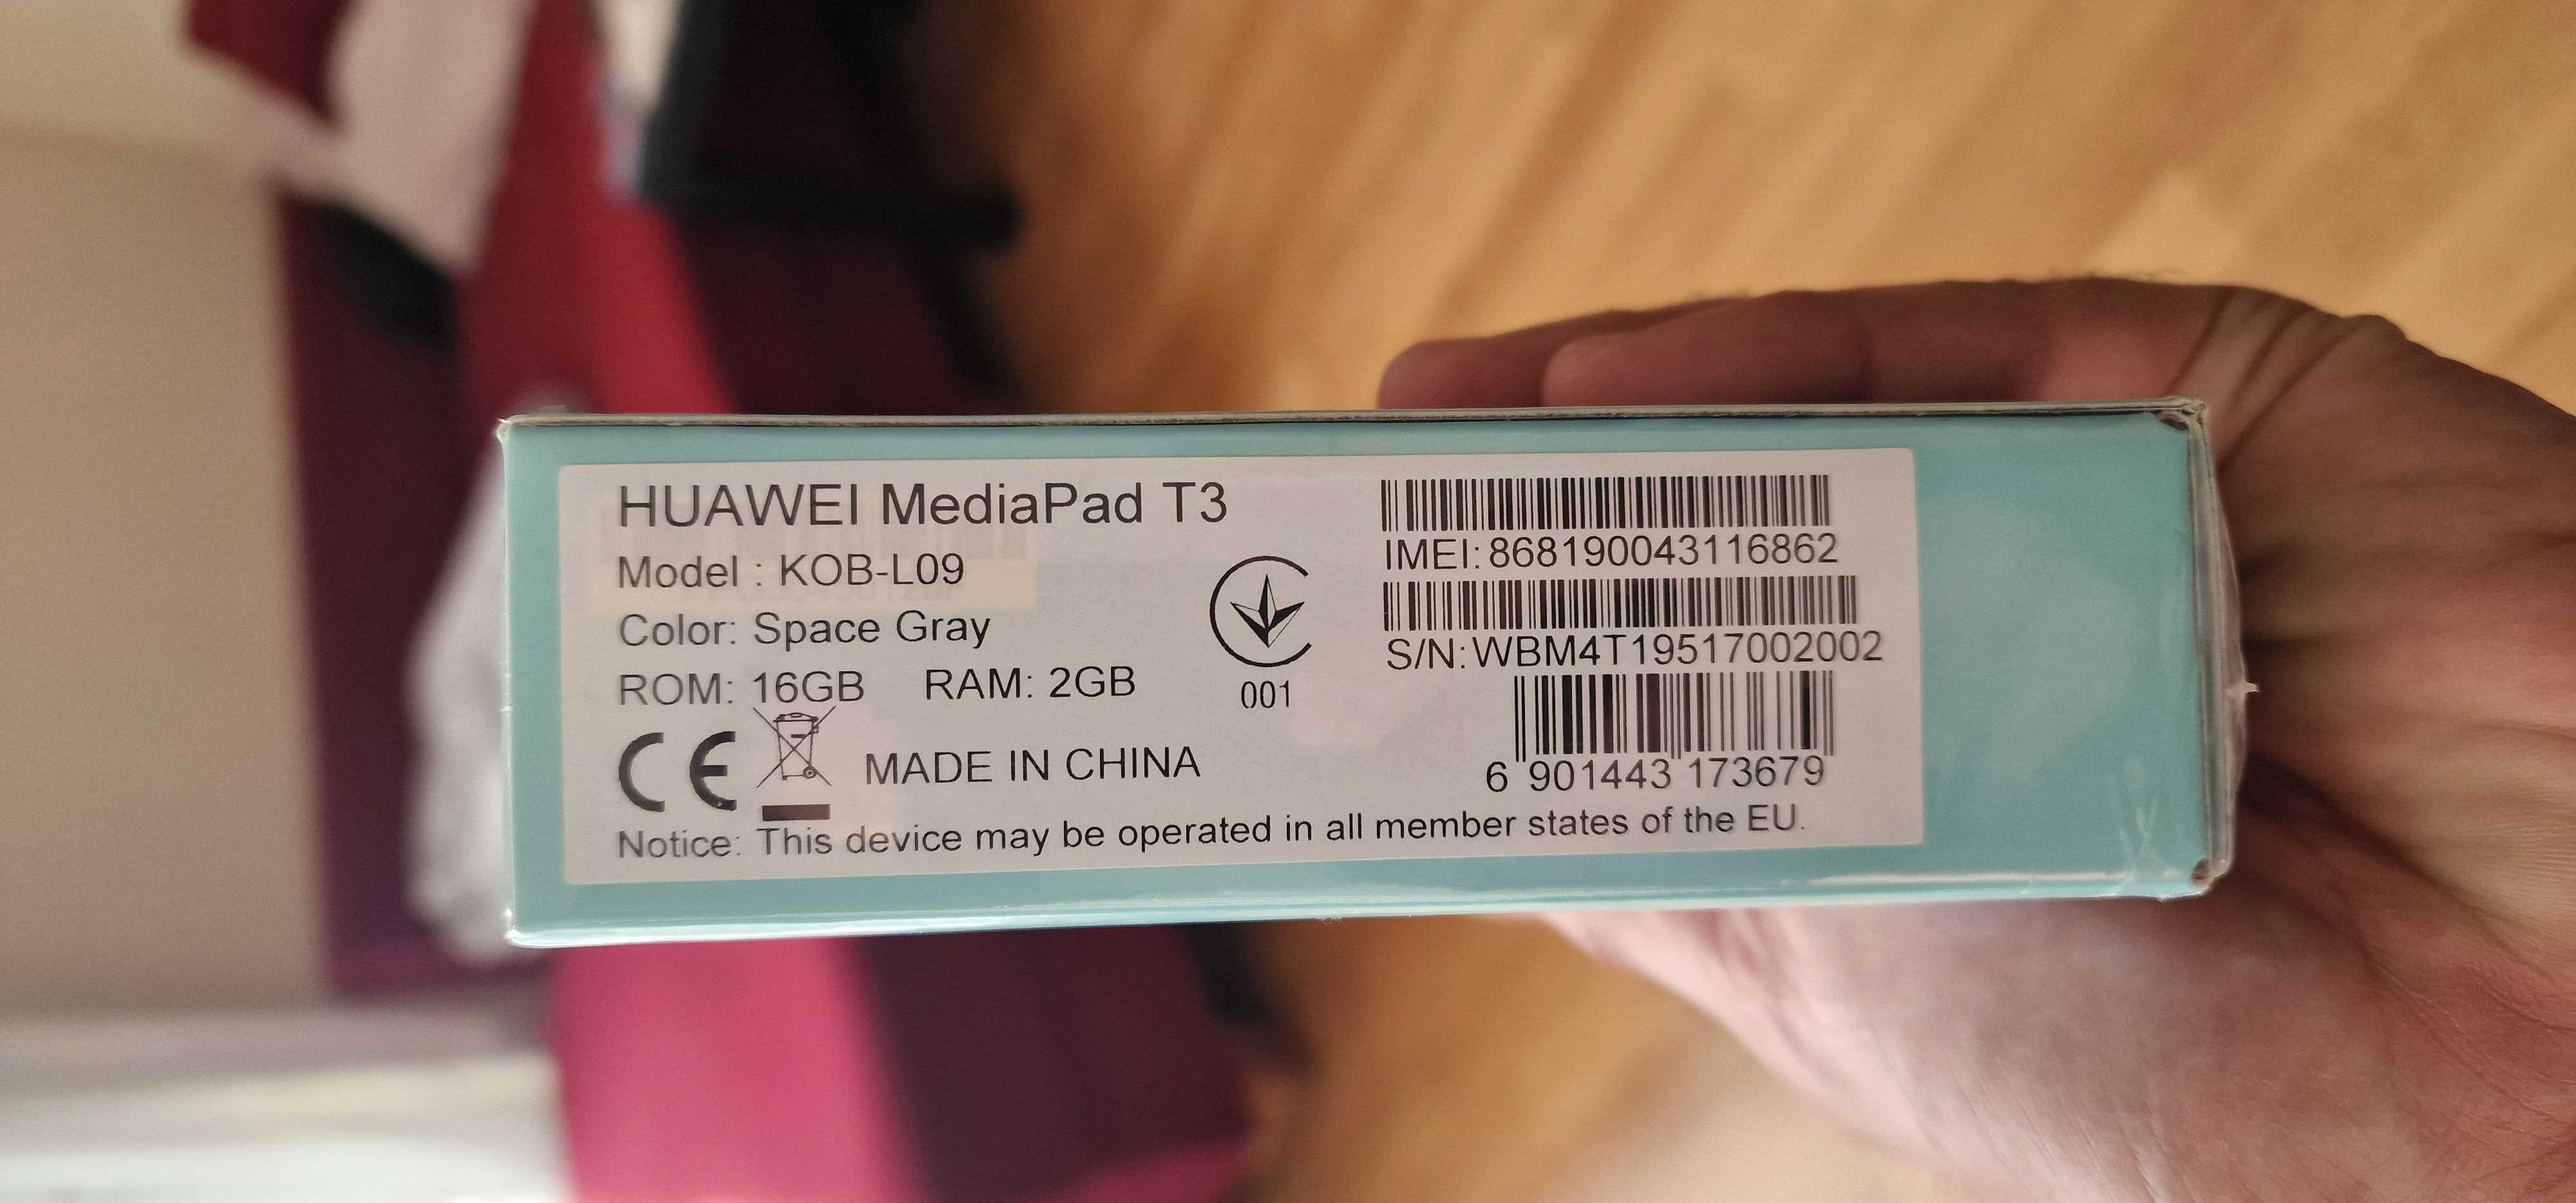 Huawei MediaPad T3 8